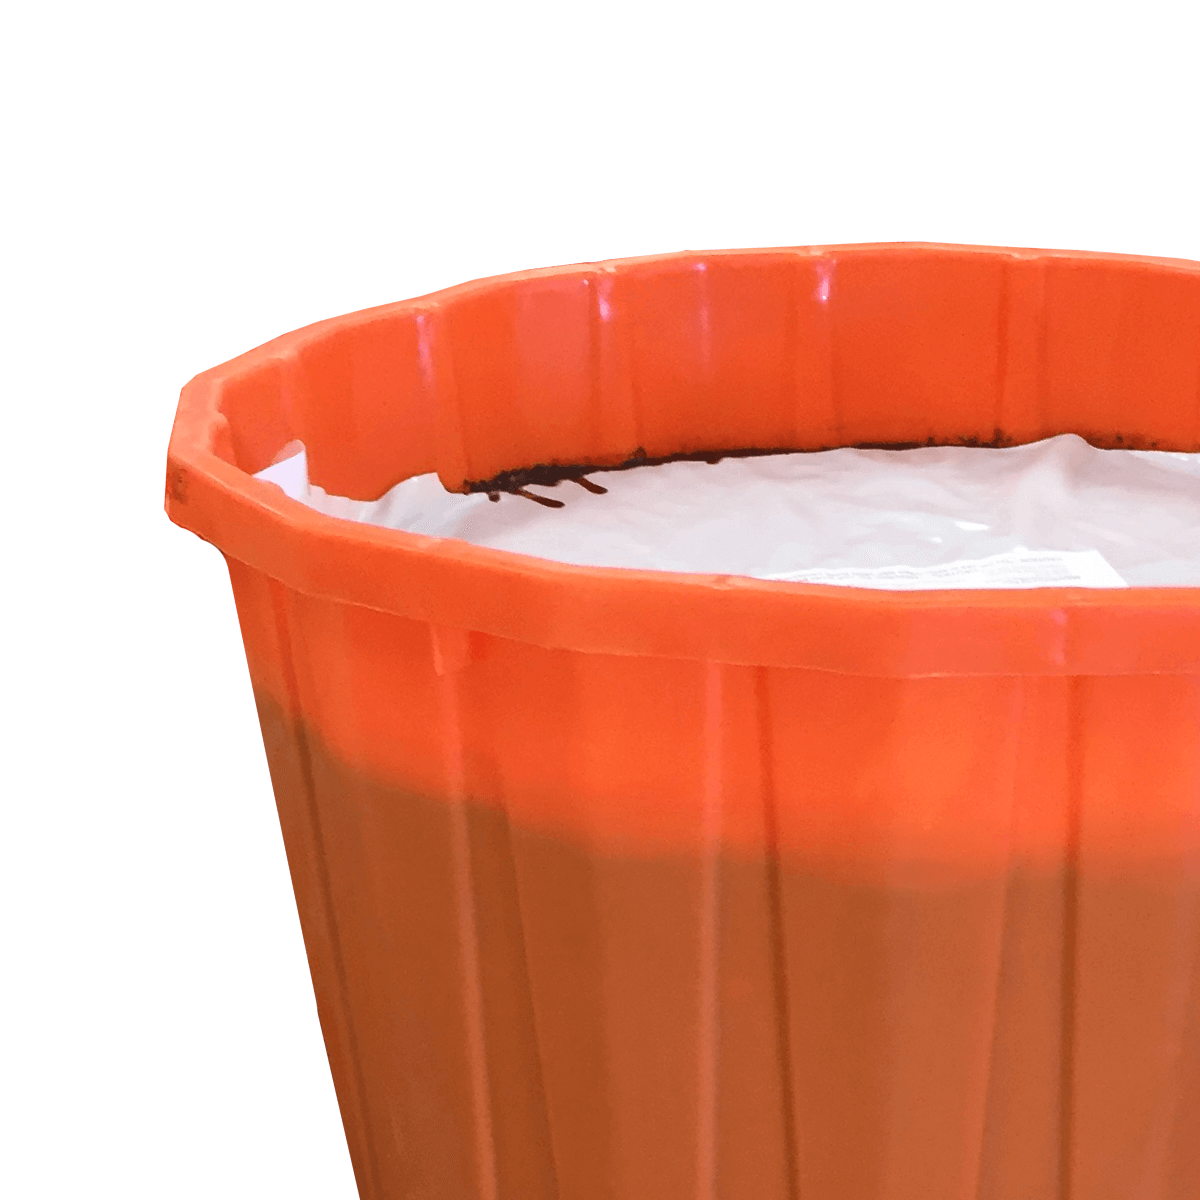 PROSTOCK™ Low Moisture Tub - Orange - 20:0 - 113 kg